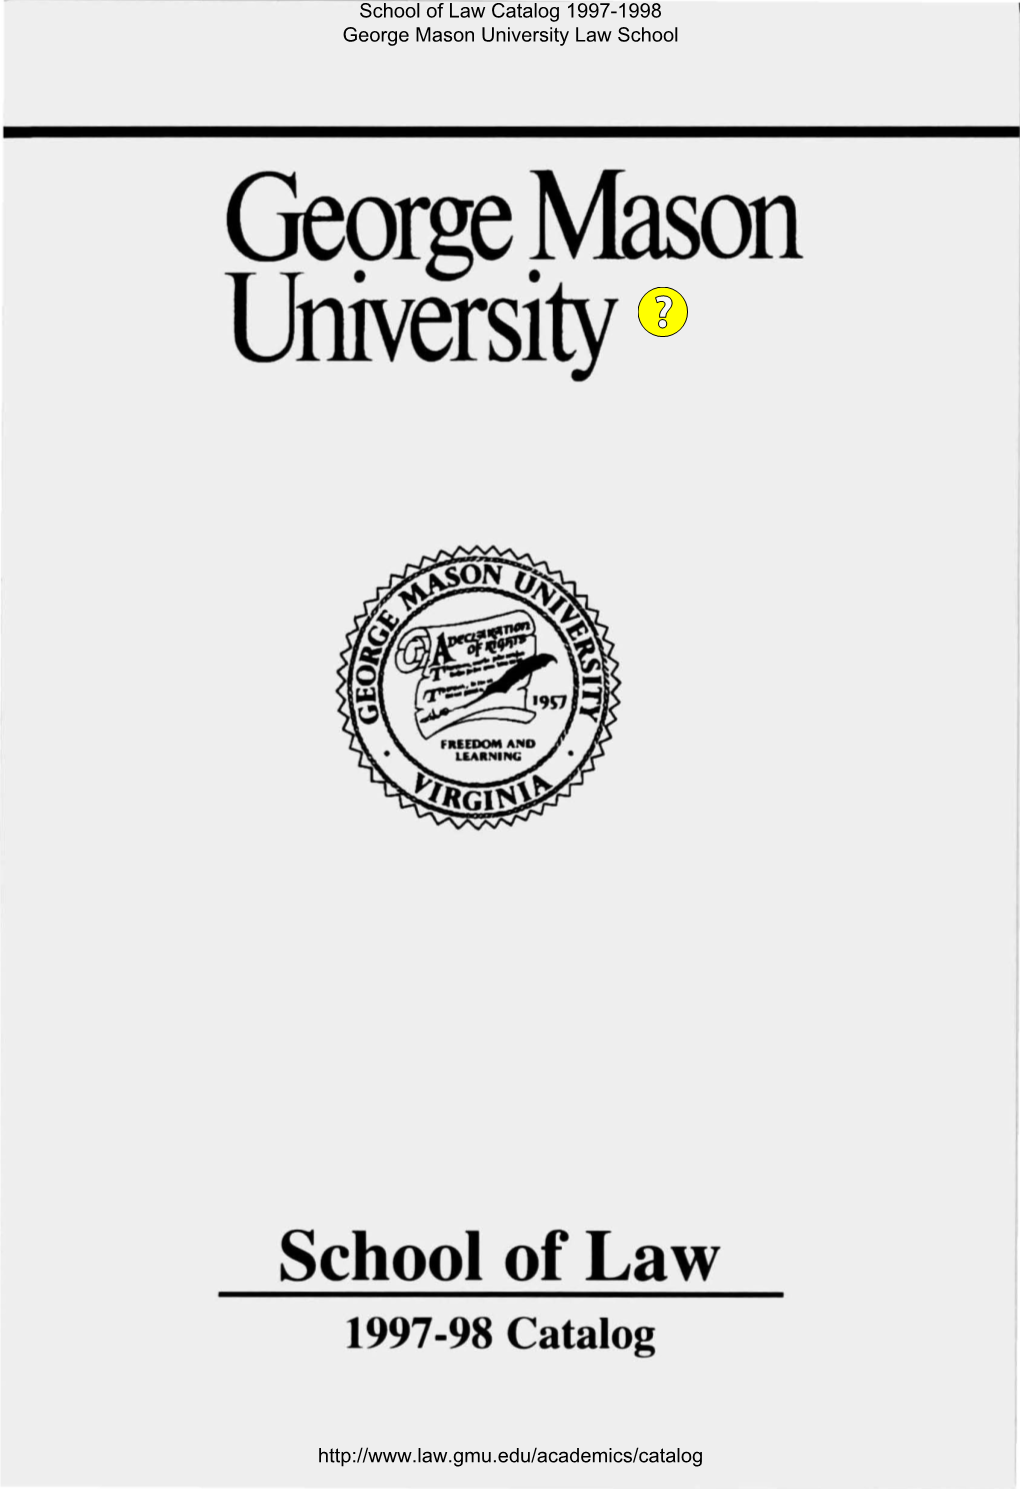 George Mason University School of Law Catalog, 1997-98